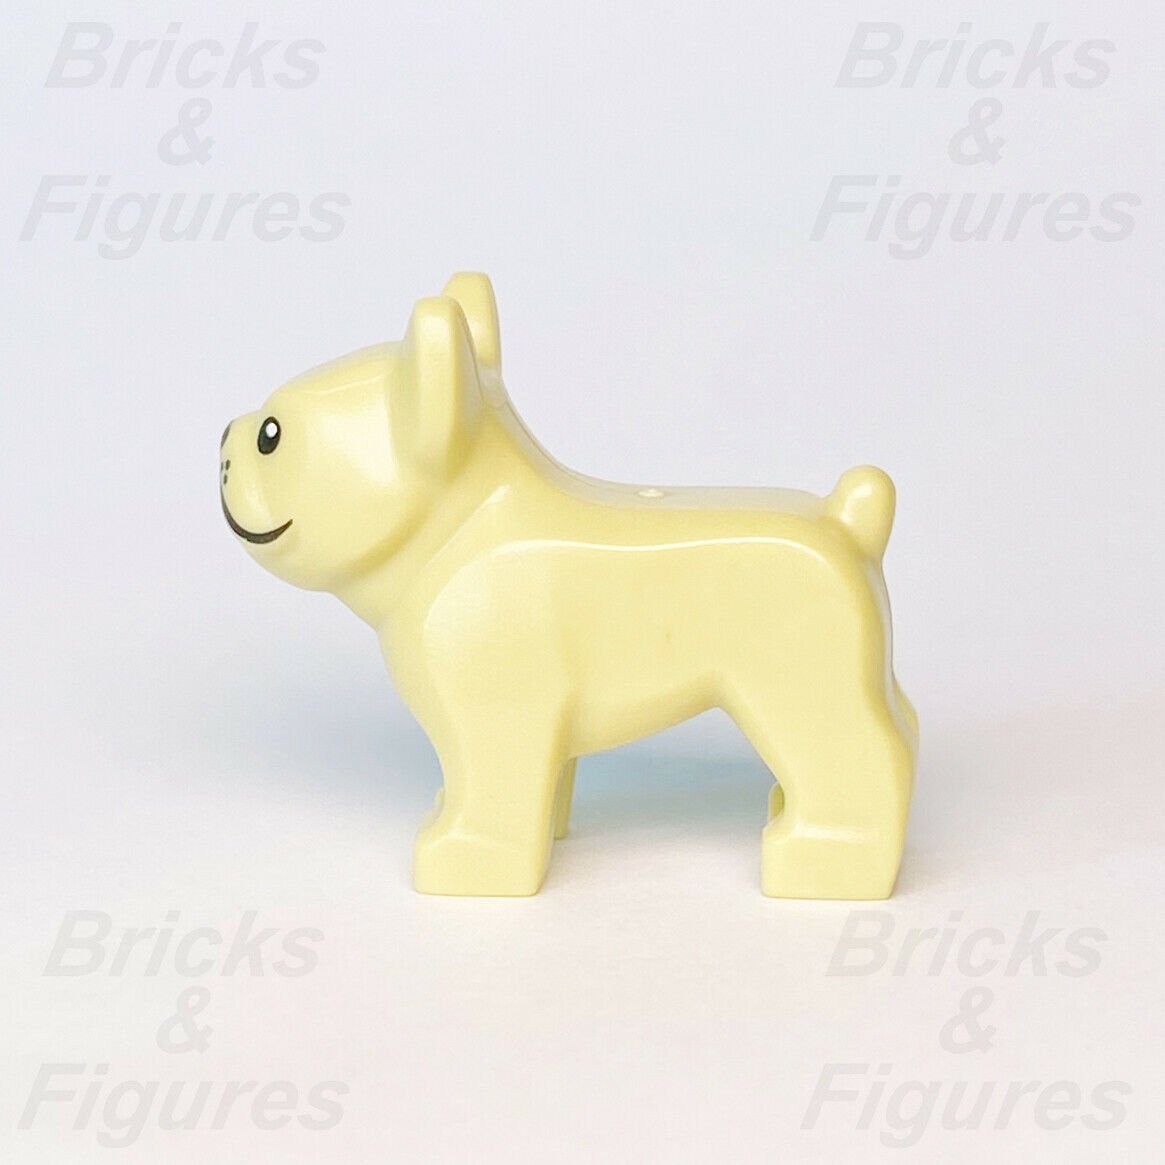 Creator LEGO French Bulldog Tan Dog Animal Minifigure Part 10291 71018 - Bricks & Figures